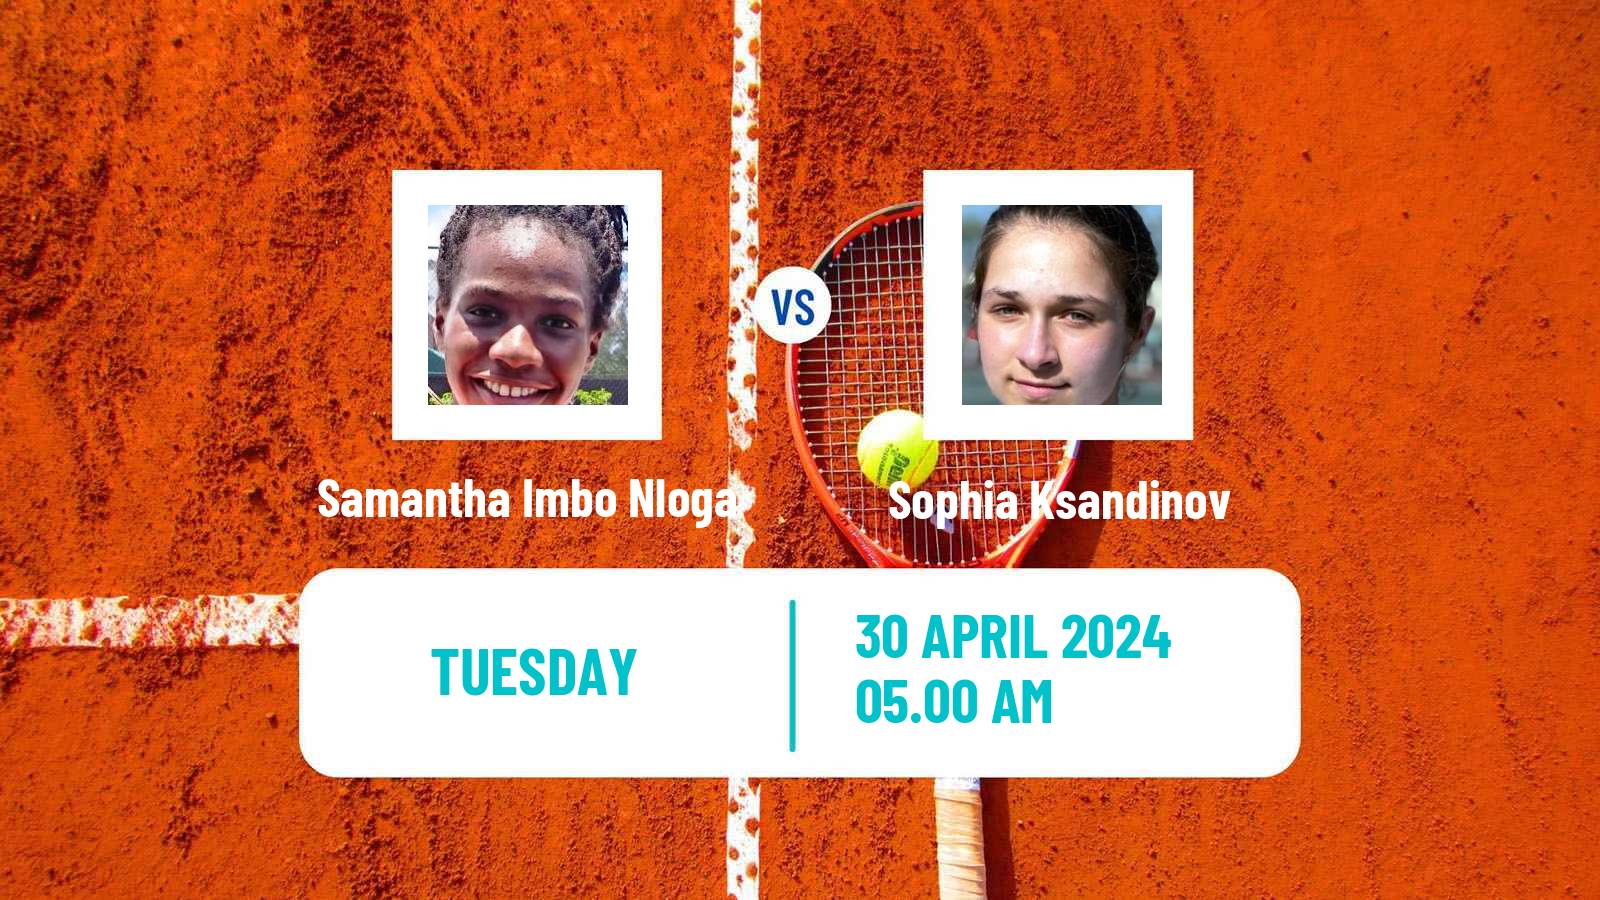 Tennis ITF W35 Hammamet 7 Women Samantha Imbo Nloga - Sophia Ksandinov